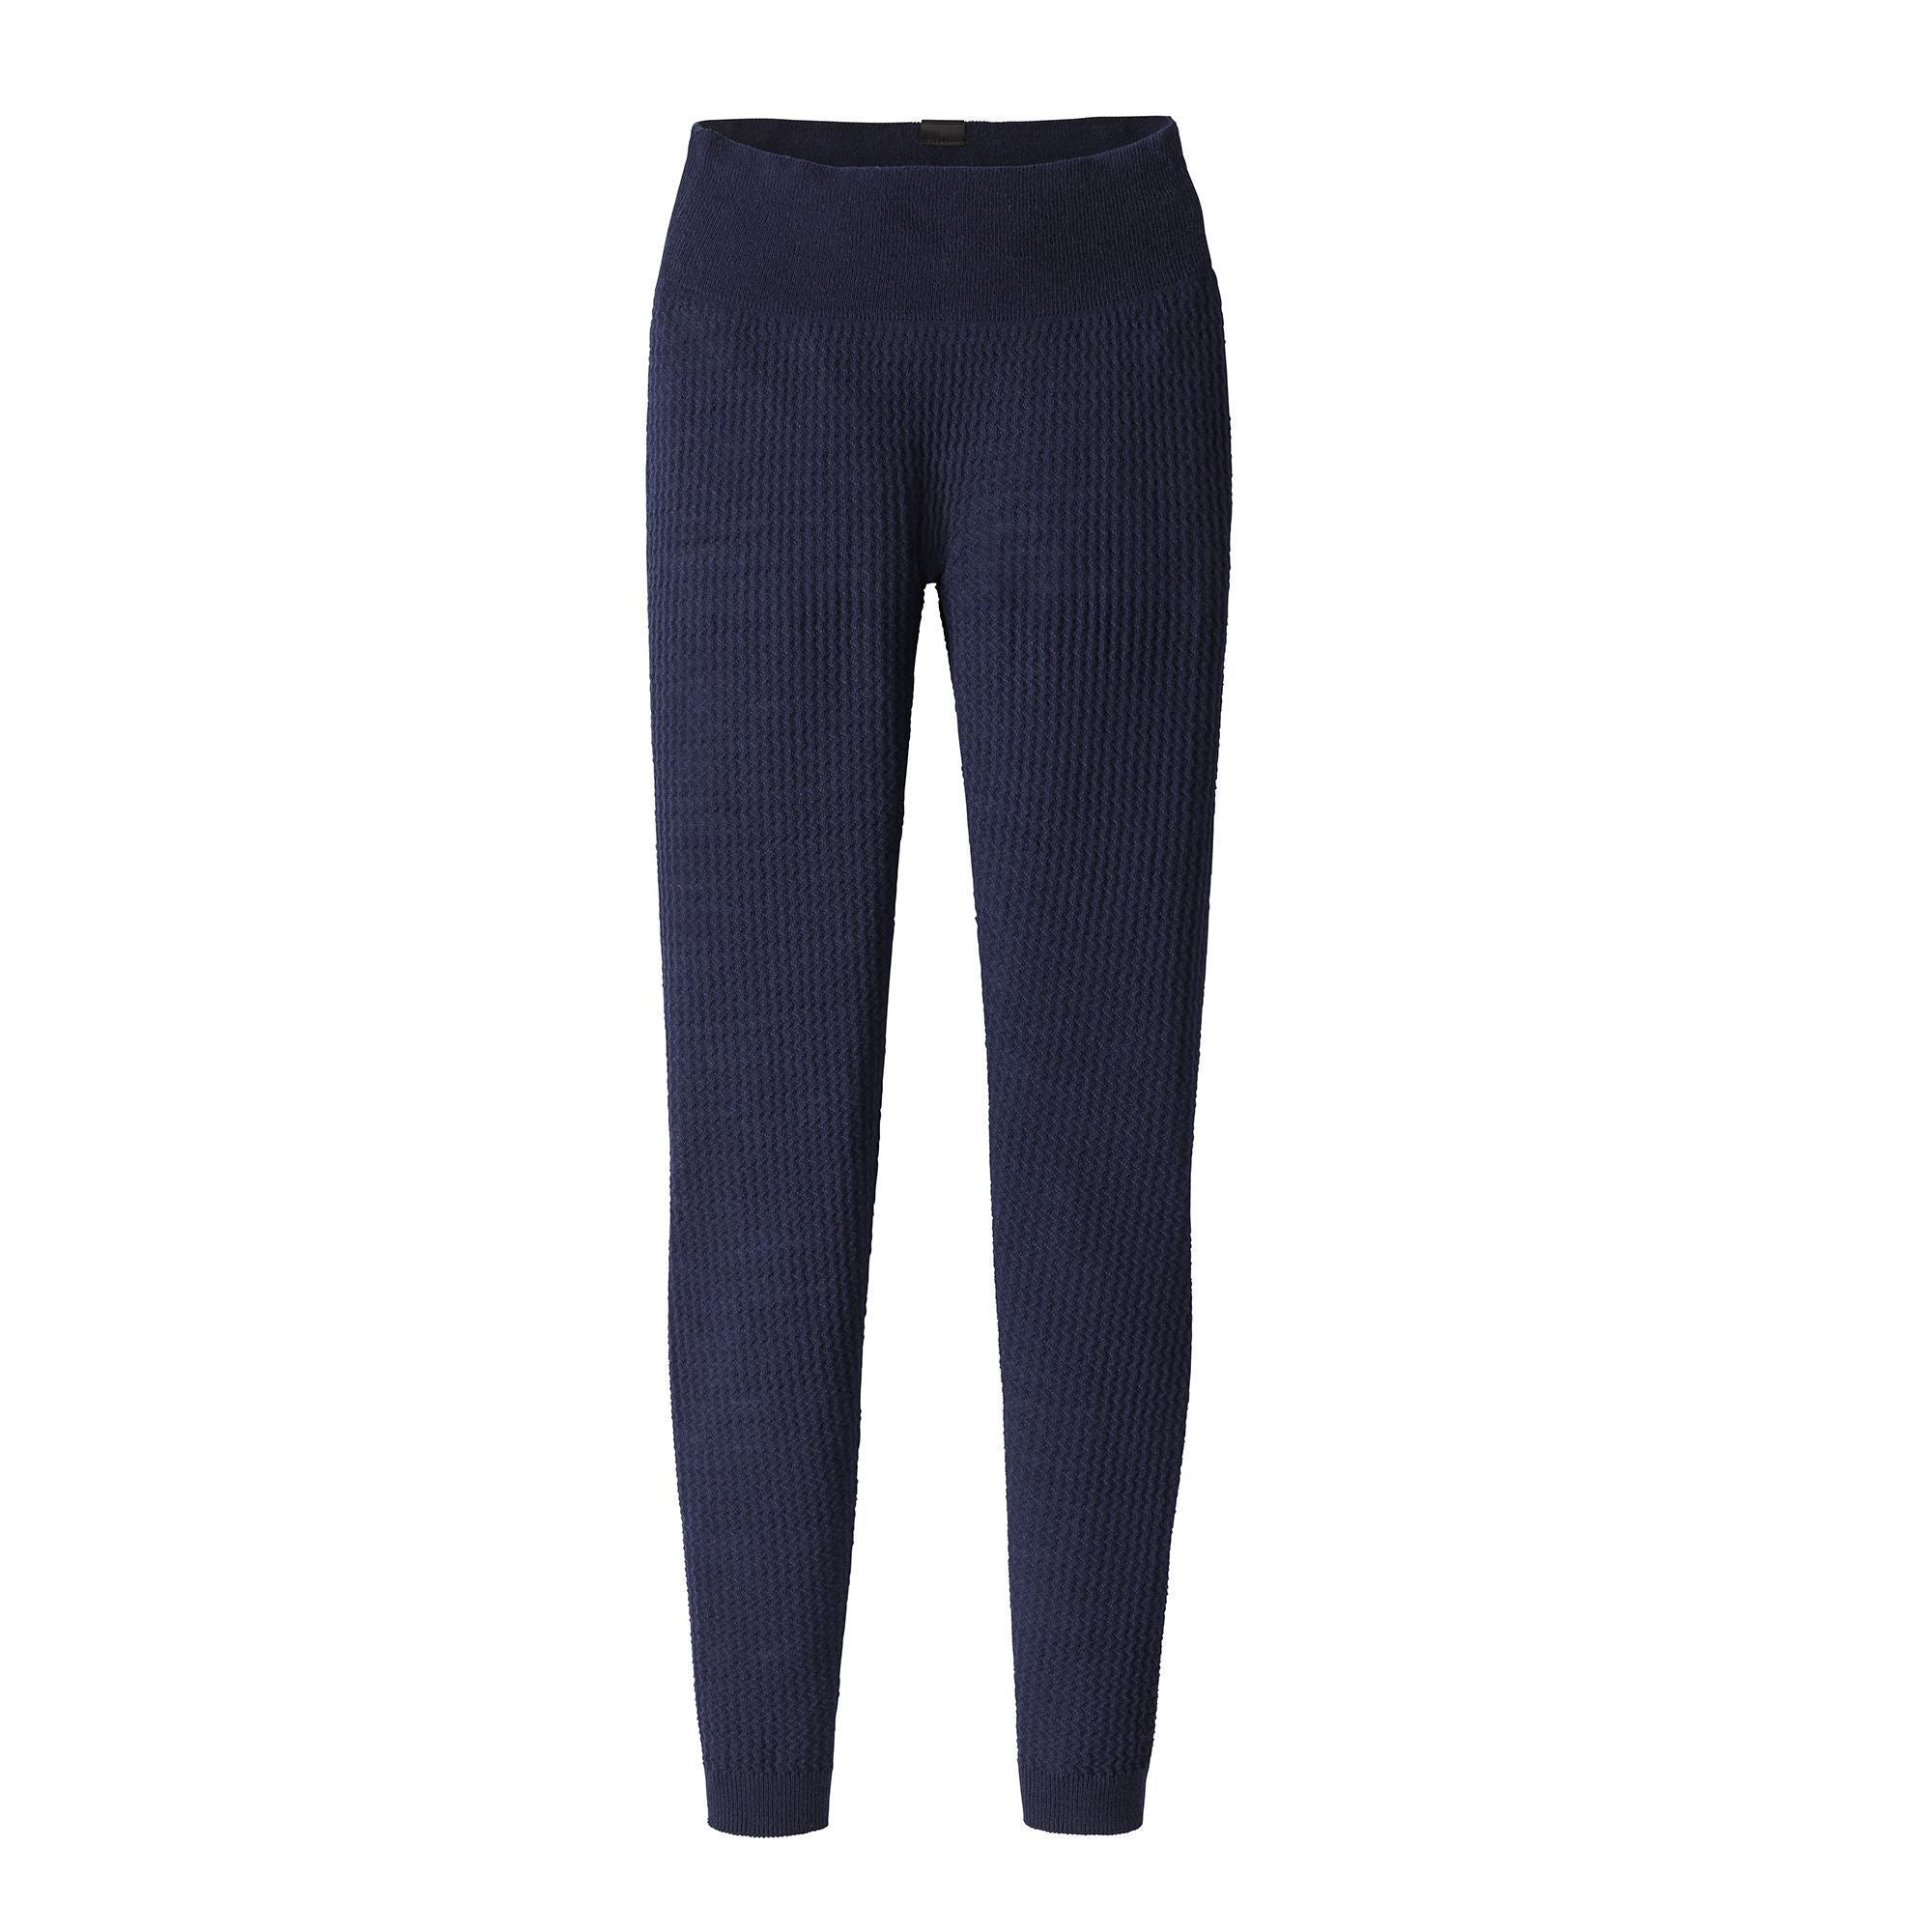 Patagonia unisex jeans-pantalon capilene air bottoms pant classic navy xs